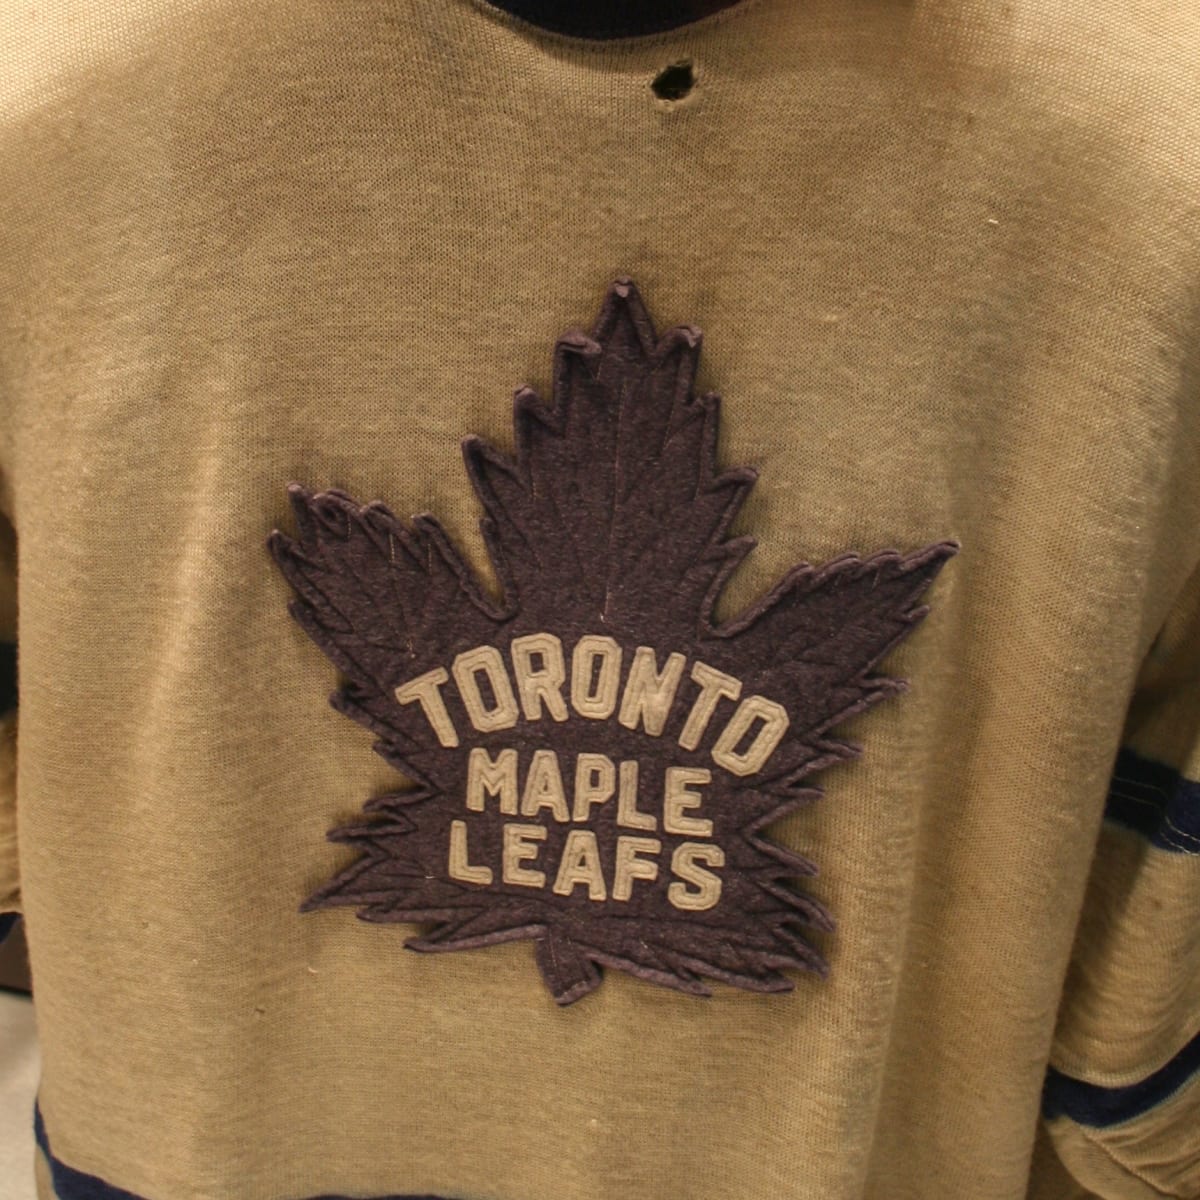 CCM Toronto Maple Leafs Heritage NHL Hockey Jersey Wool Sweater Vintage 1950